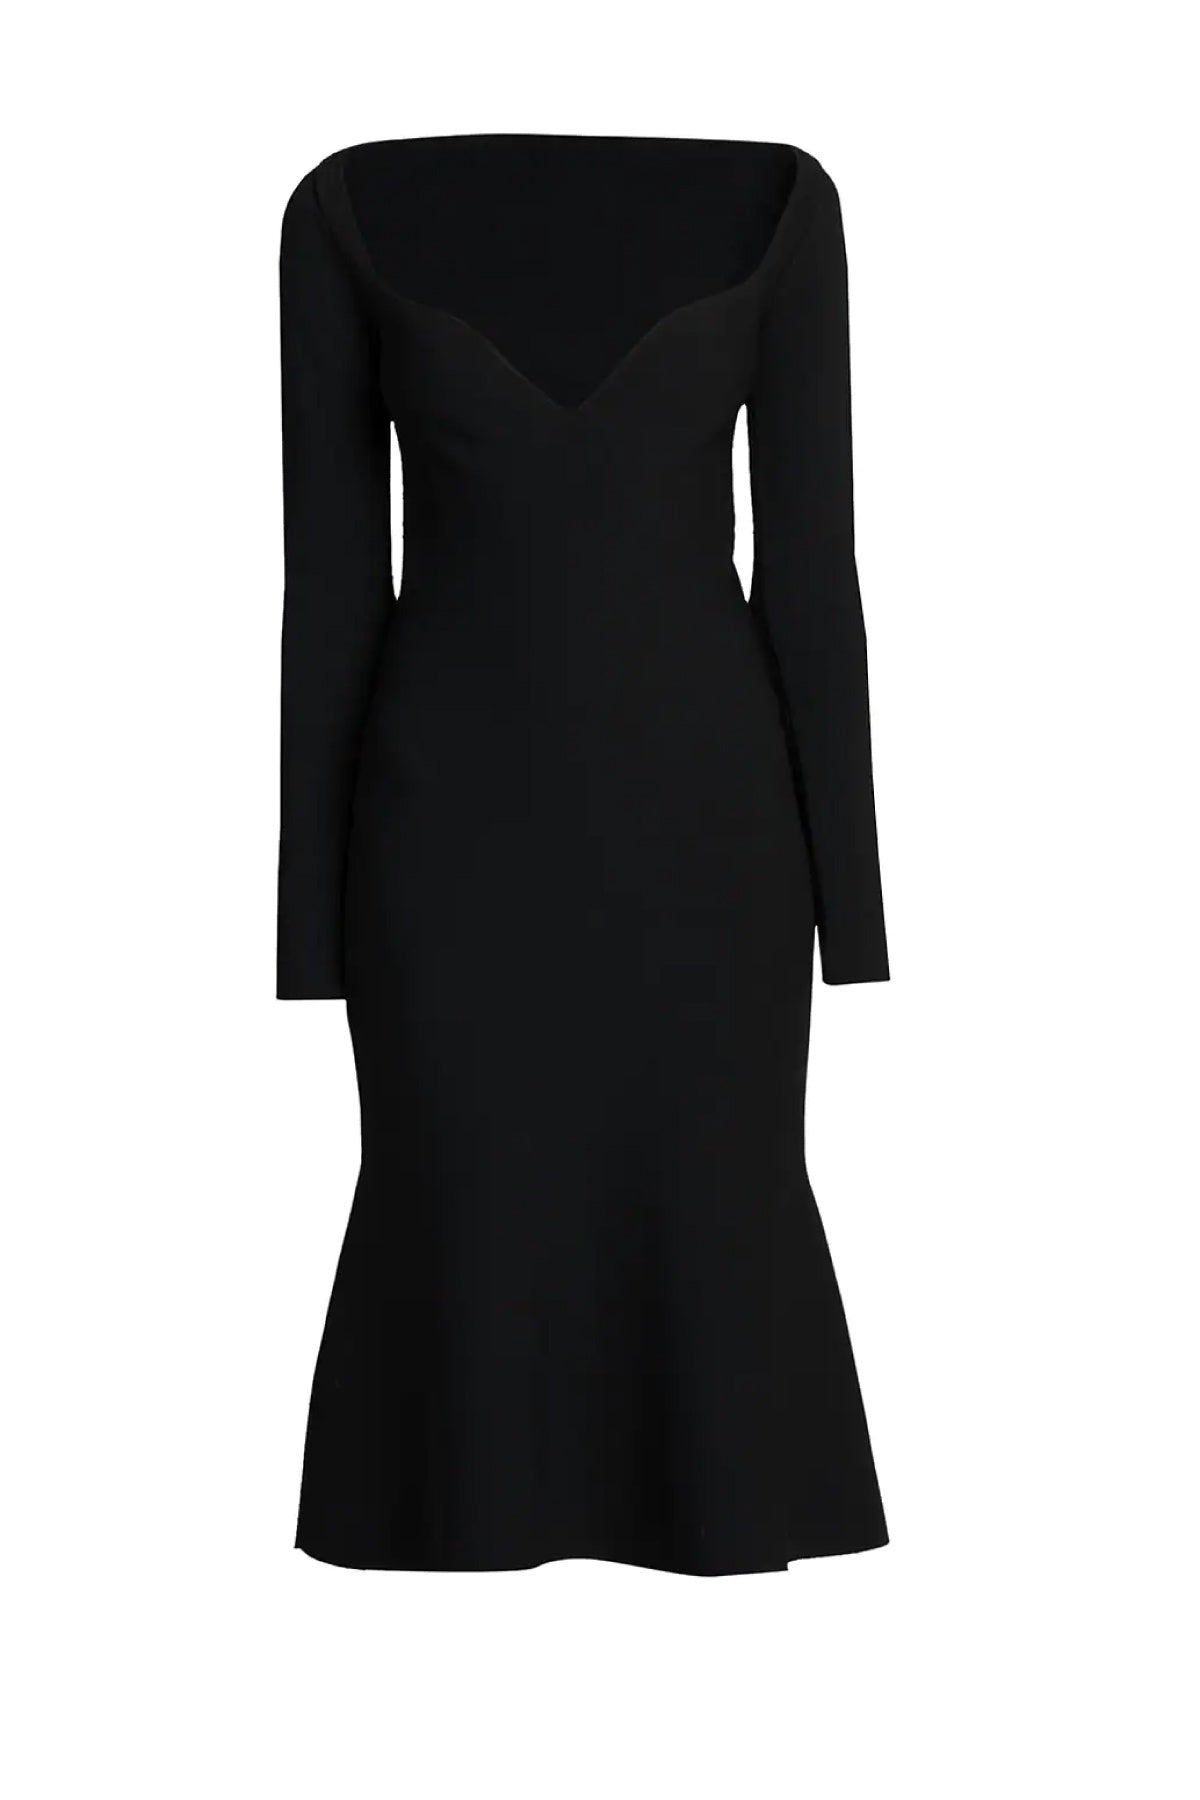 Stella McCartney Compact Knit Midi Dress - Black